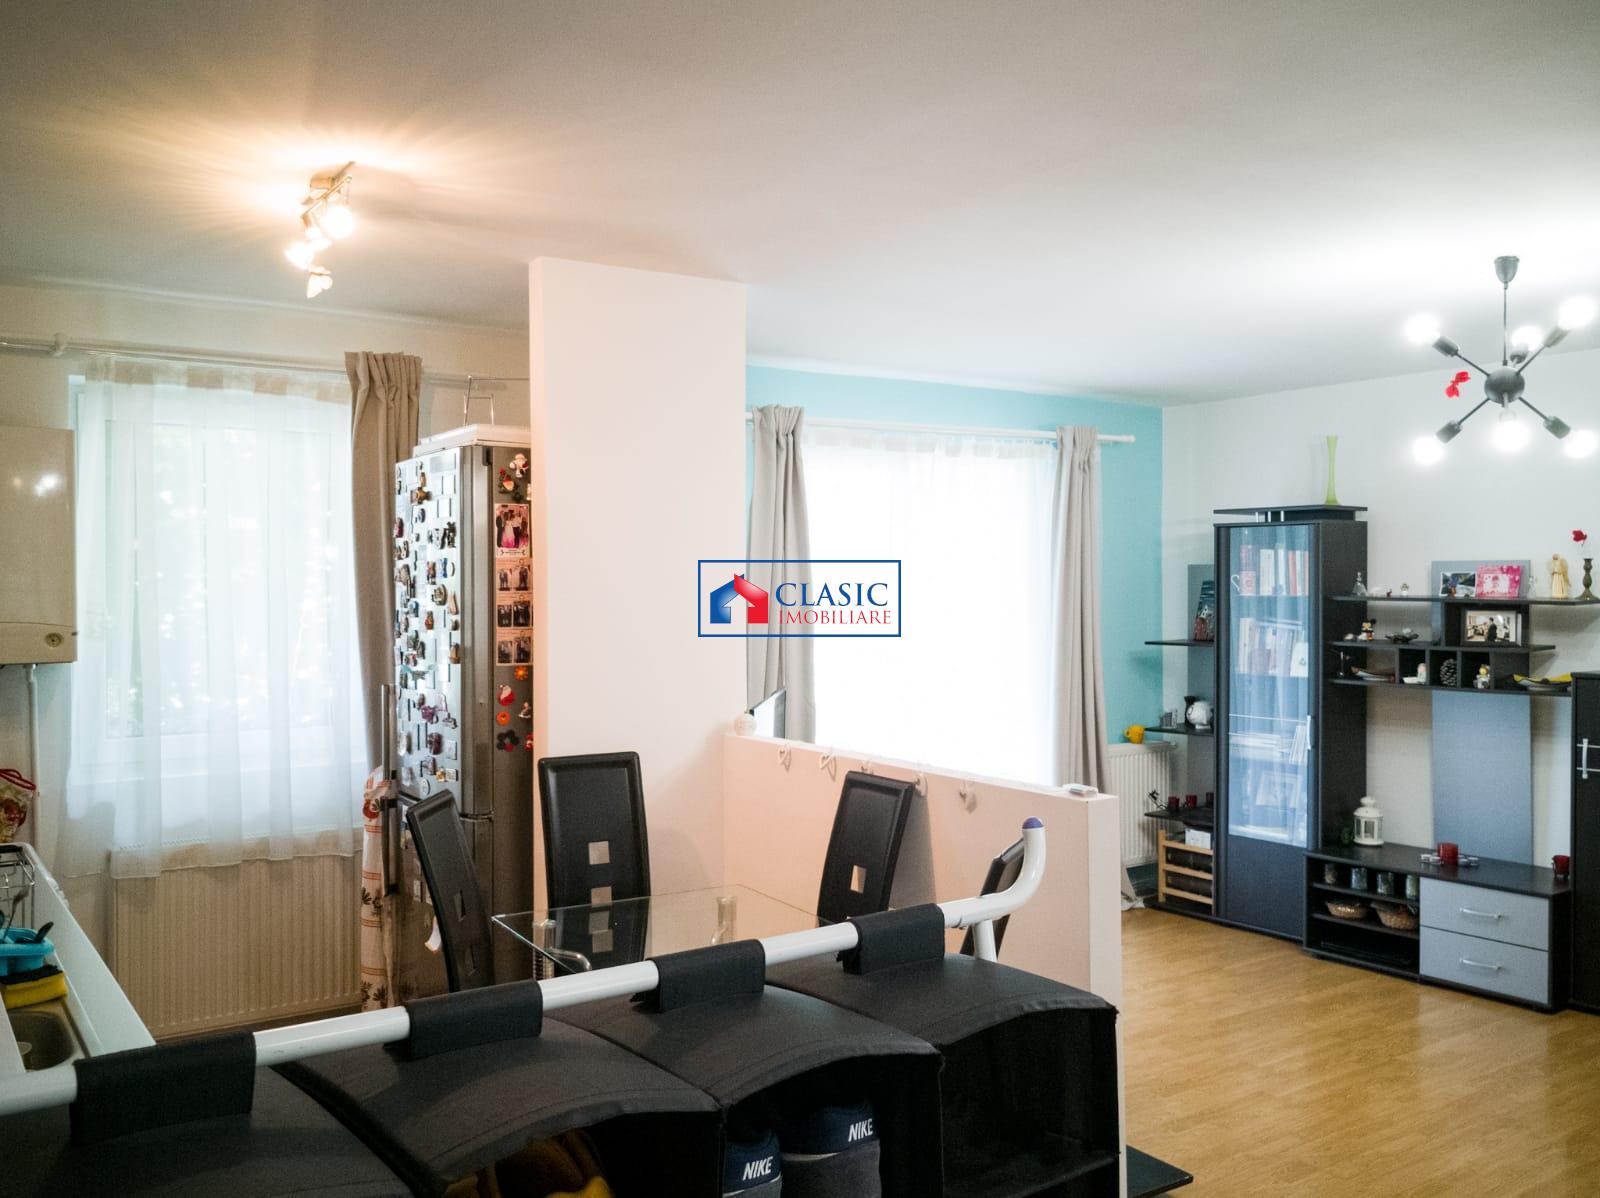 Vanzare apartament 3 camere in bloc nou zona Manastur str Bucovina